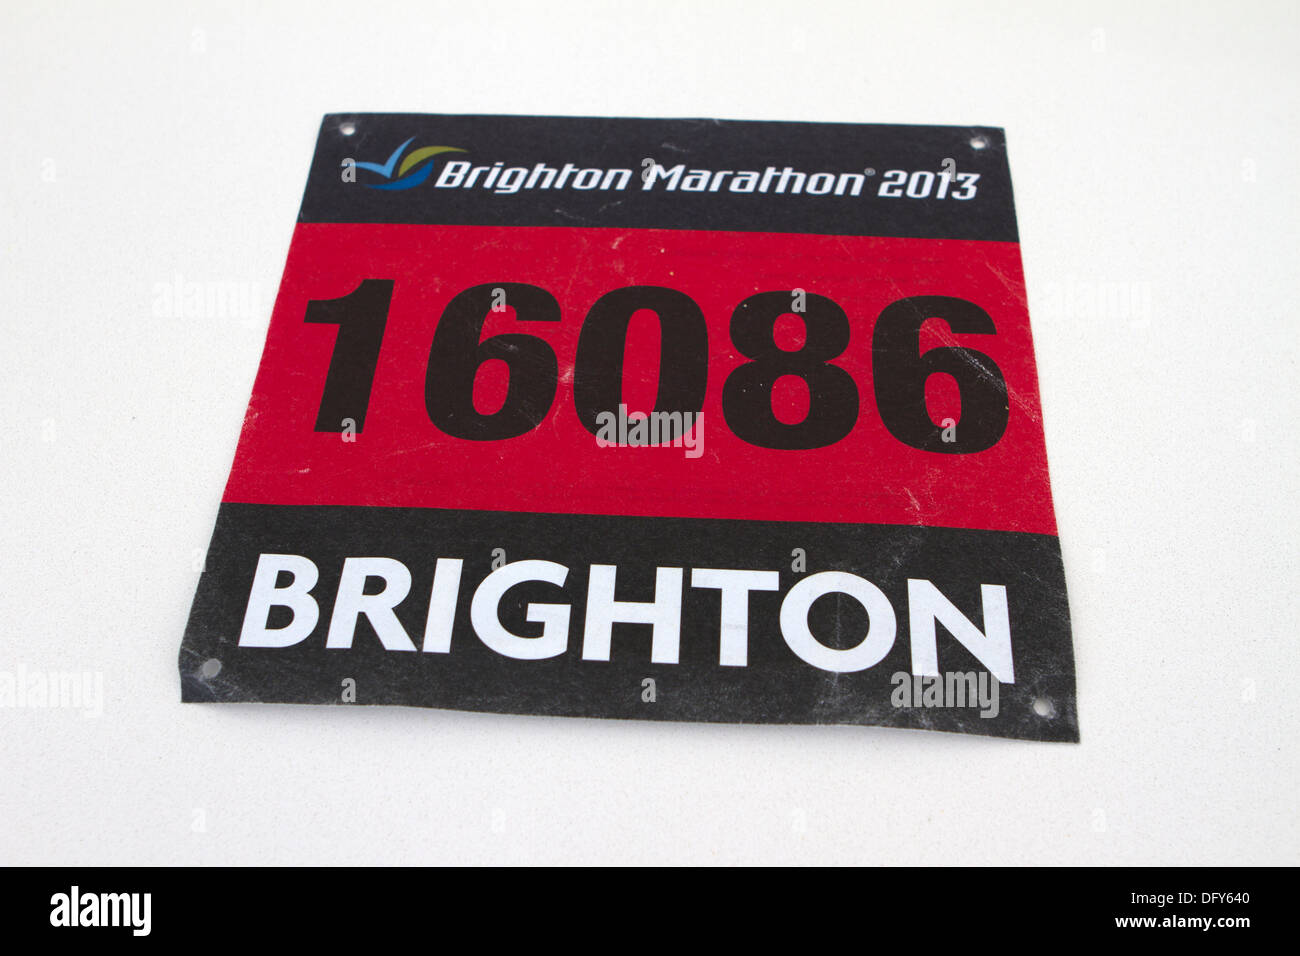 Brighton Marathon 2013 race bib. Stock Photo